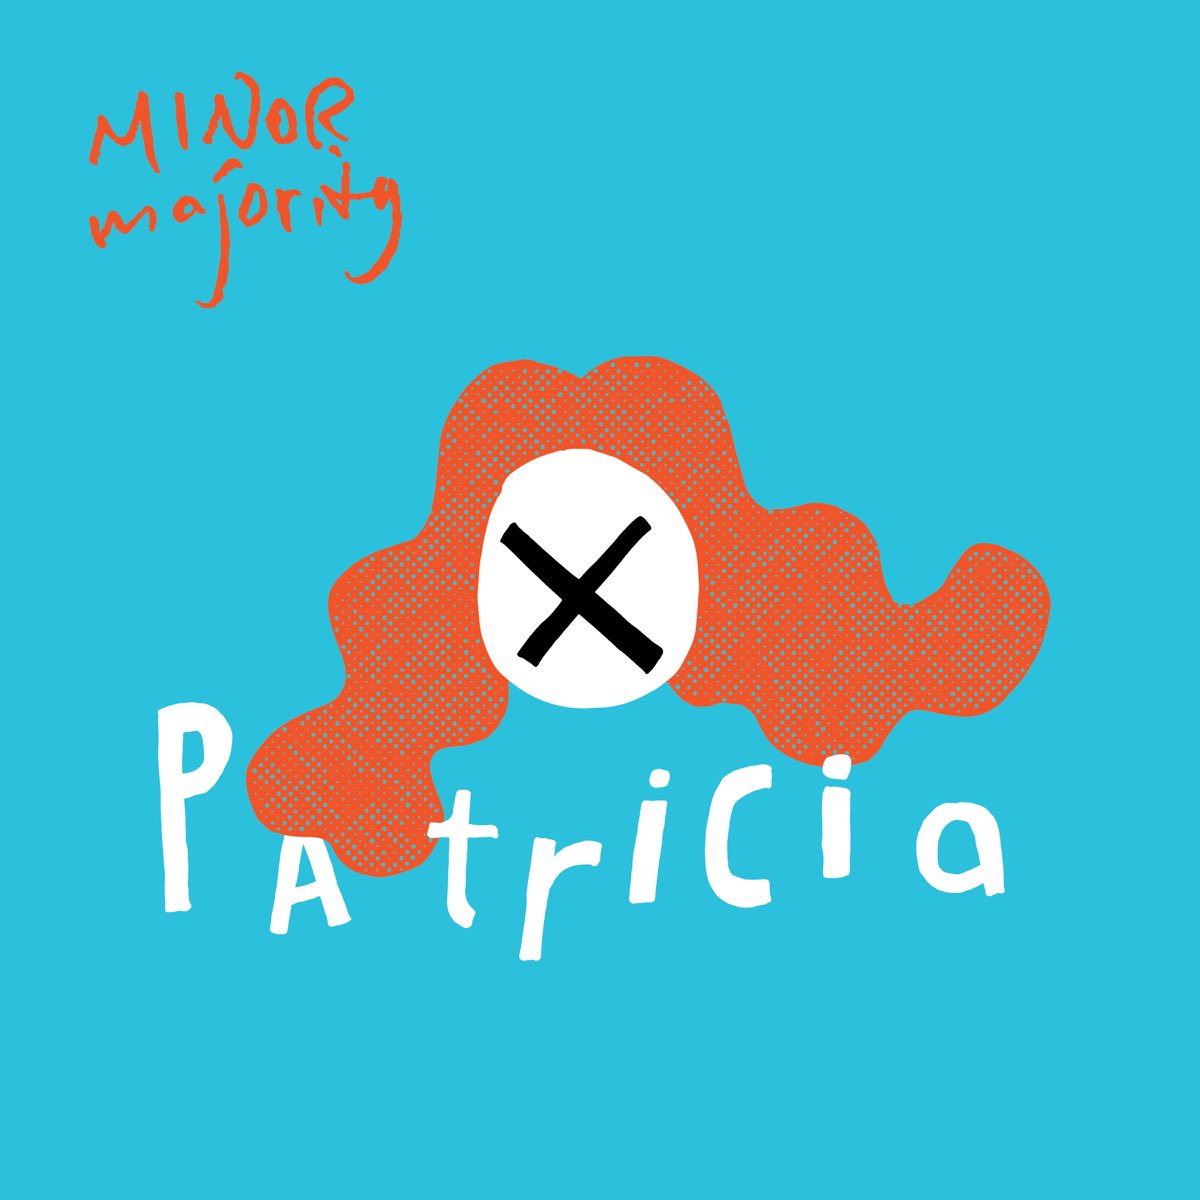 Listen to pat. Patricia Major. Minor majority видео.